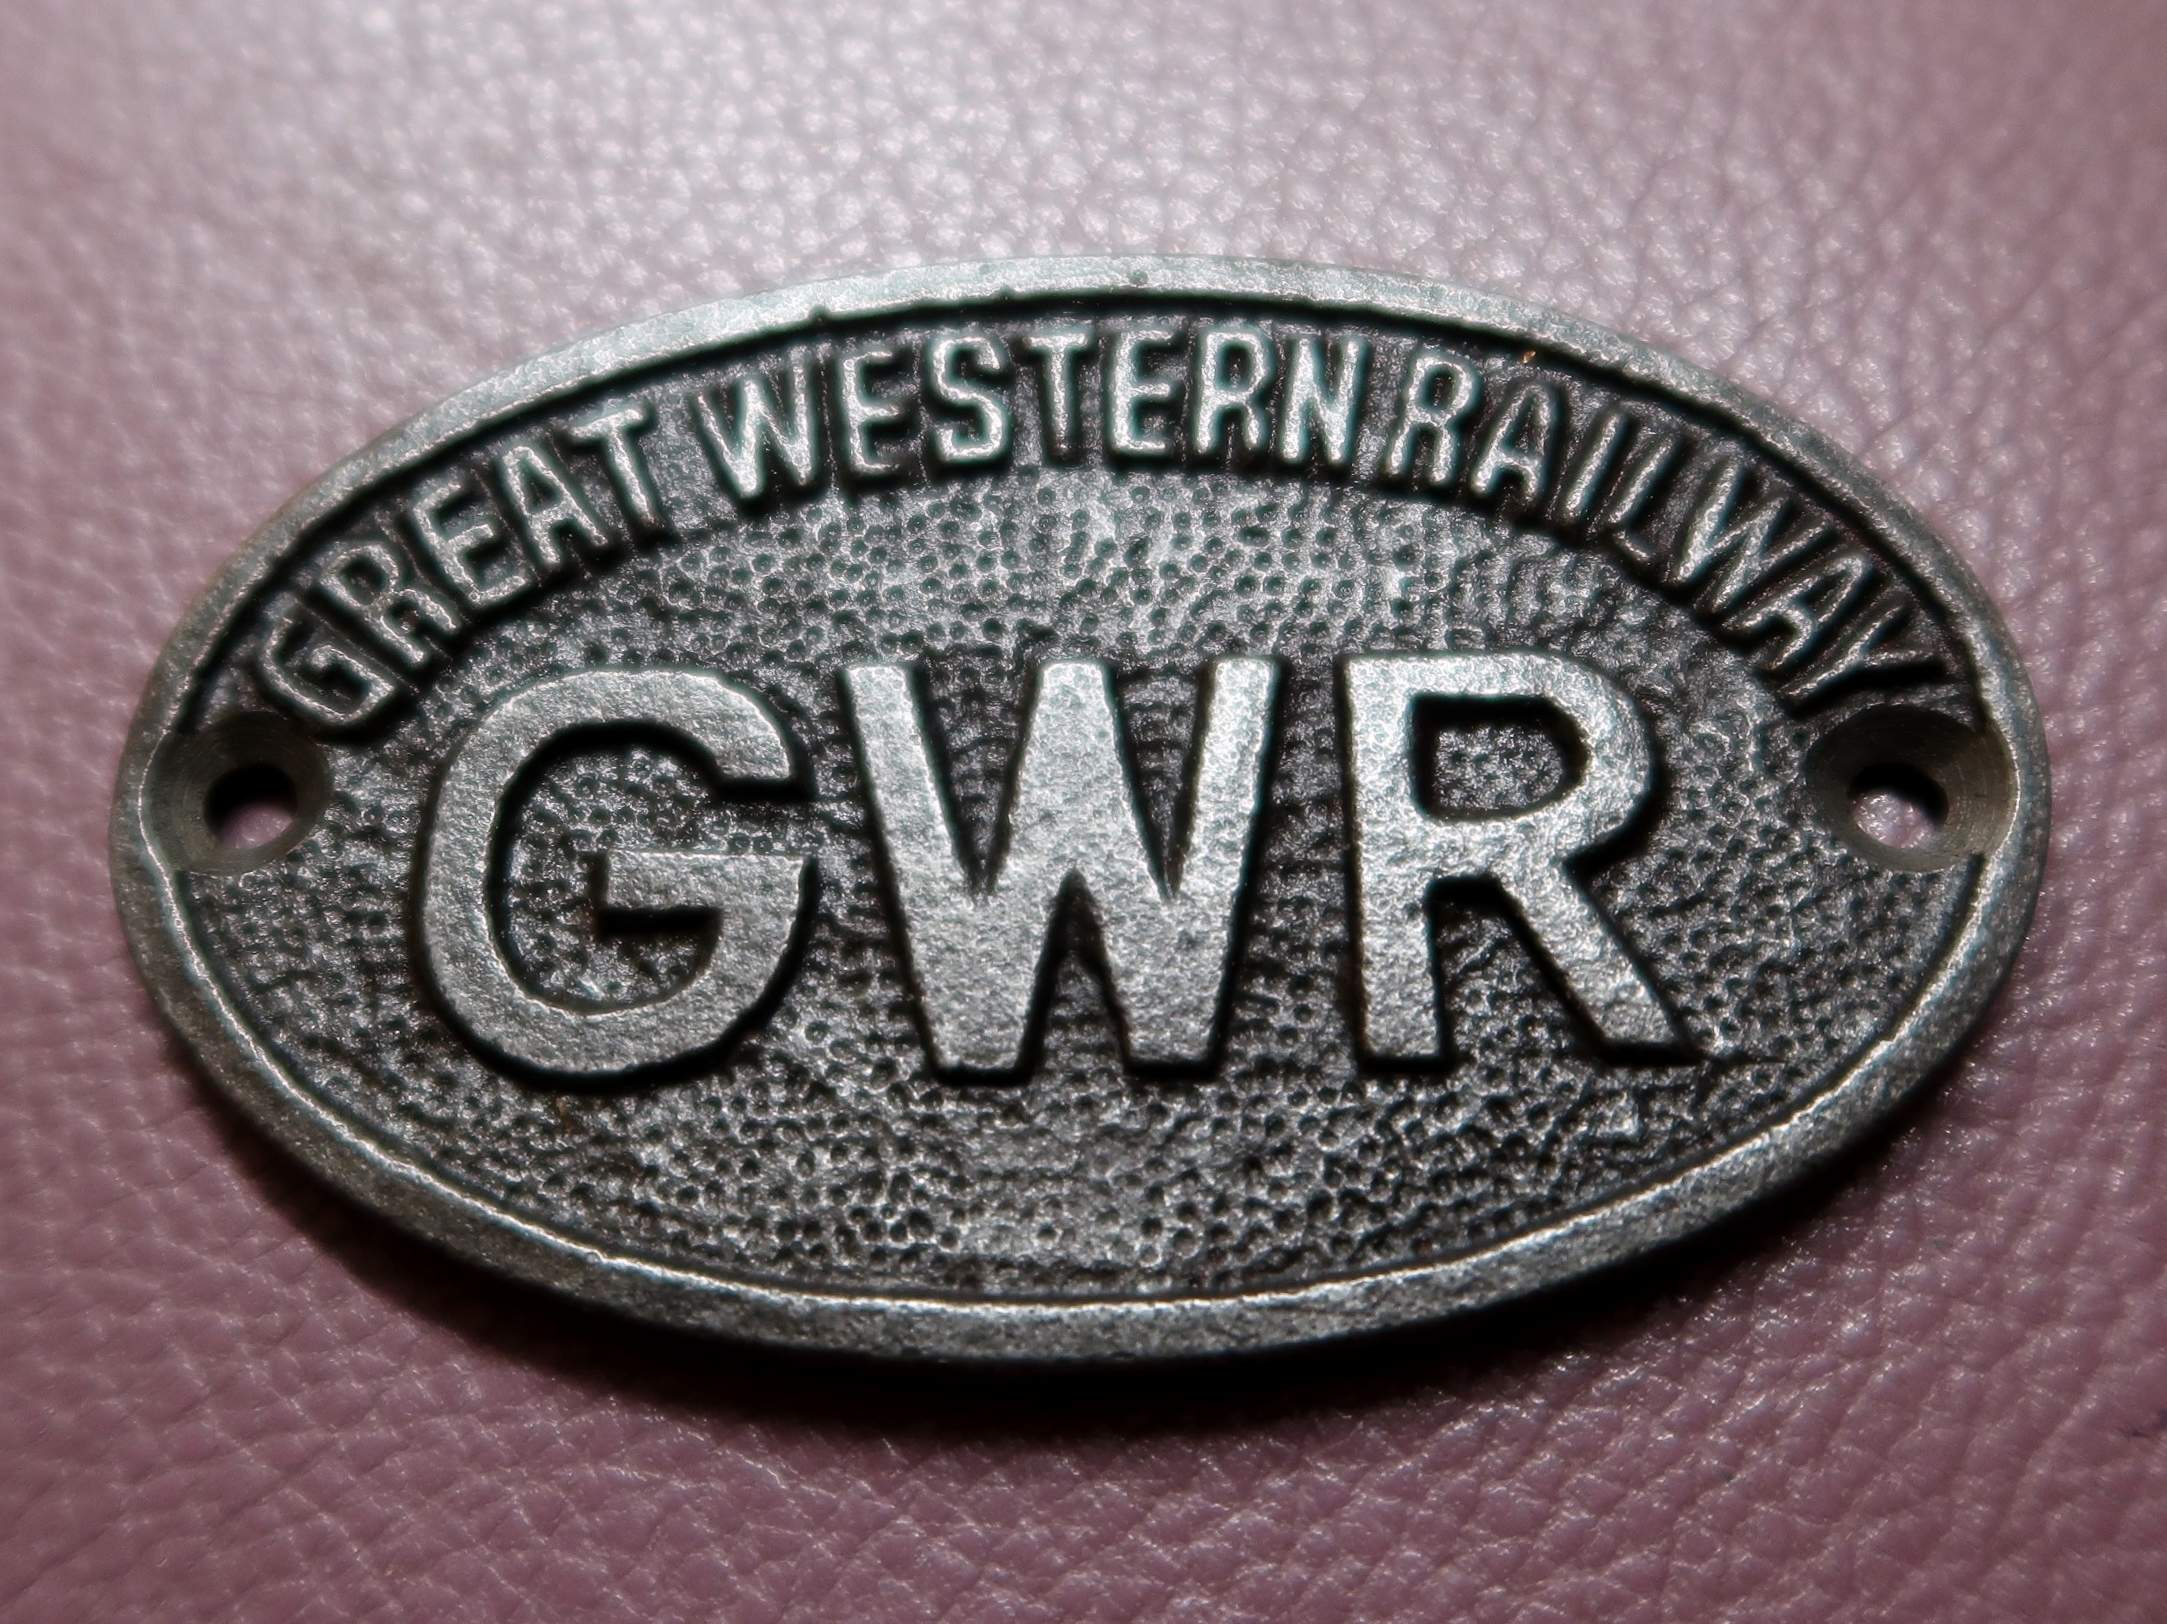 Great Western Railway sign.